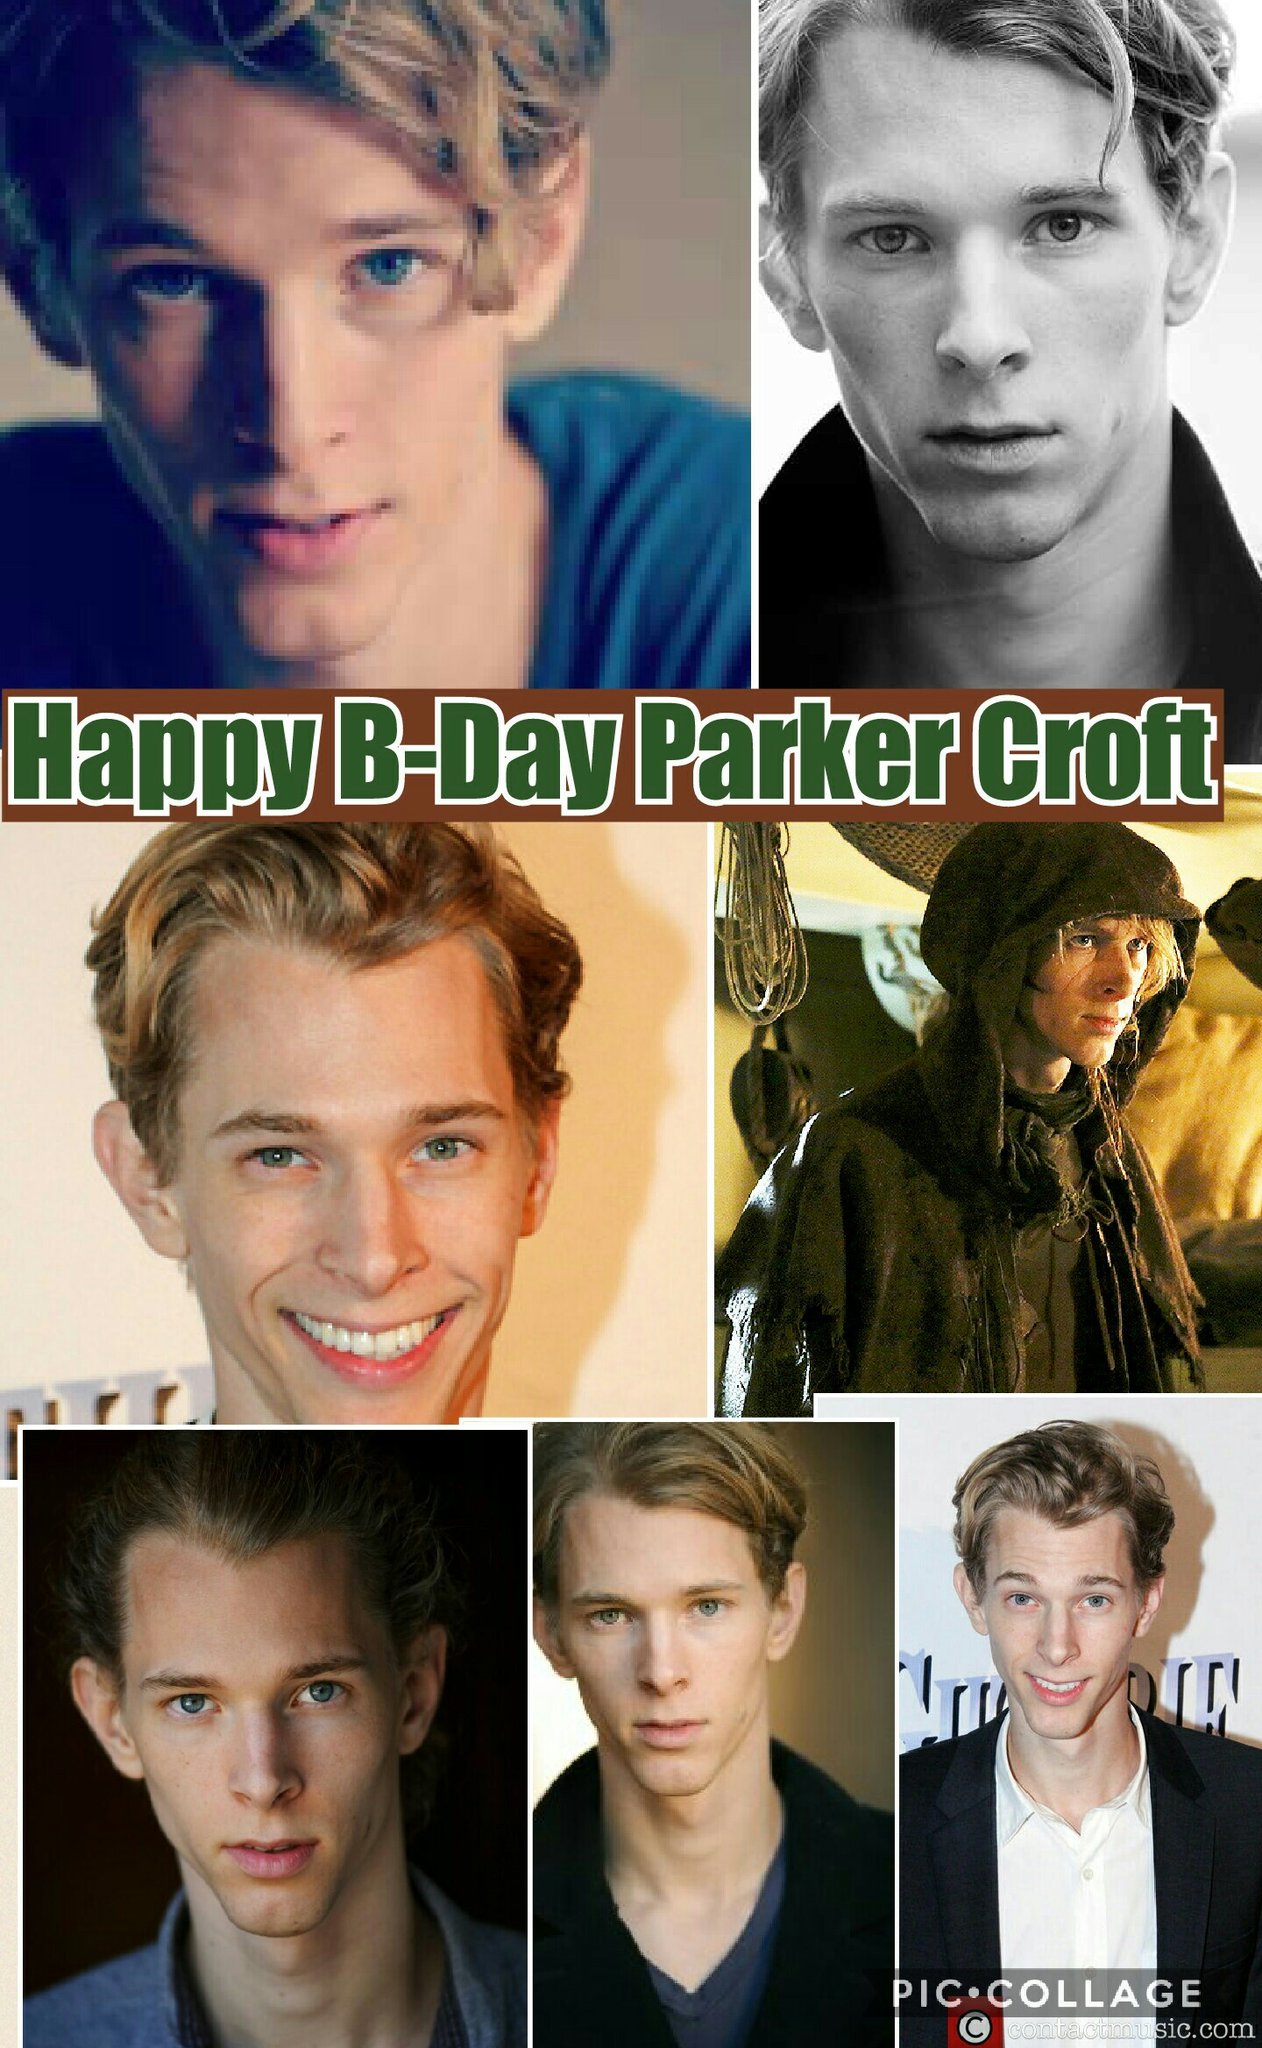 Happy birthday to my favorite lost boy....Happy birthday Parker Croft!   